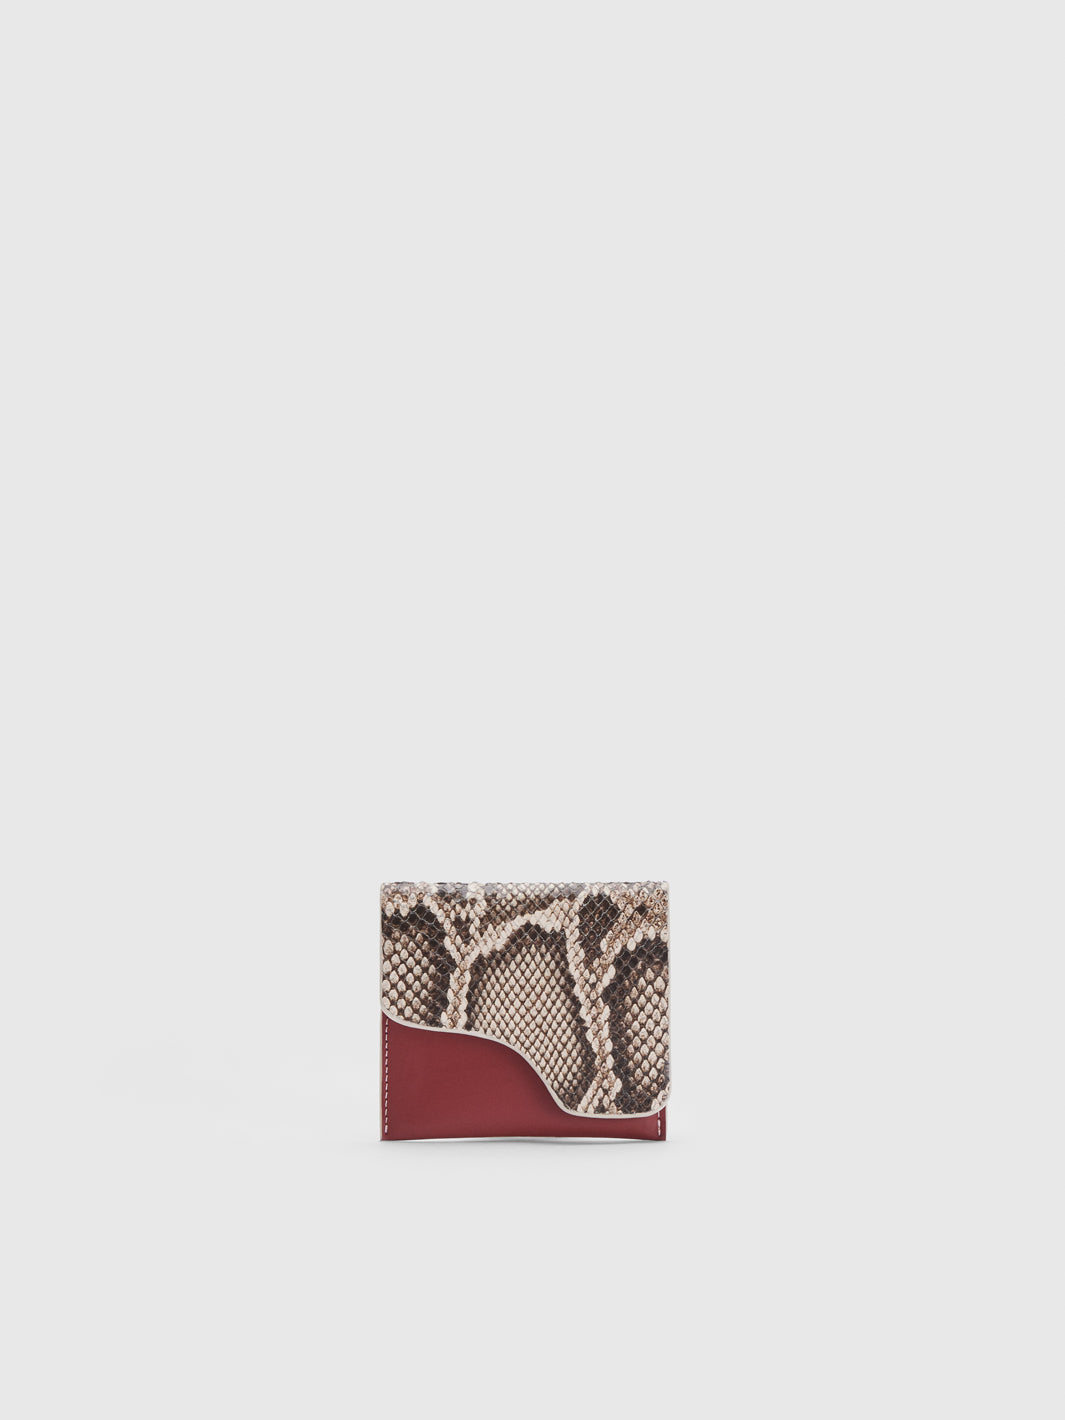 Olba Linen/Merlot Printed snake/Leather Wallet